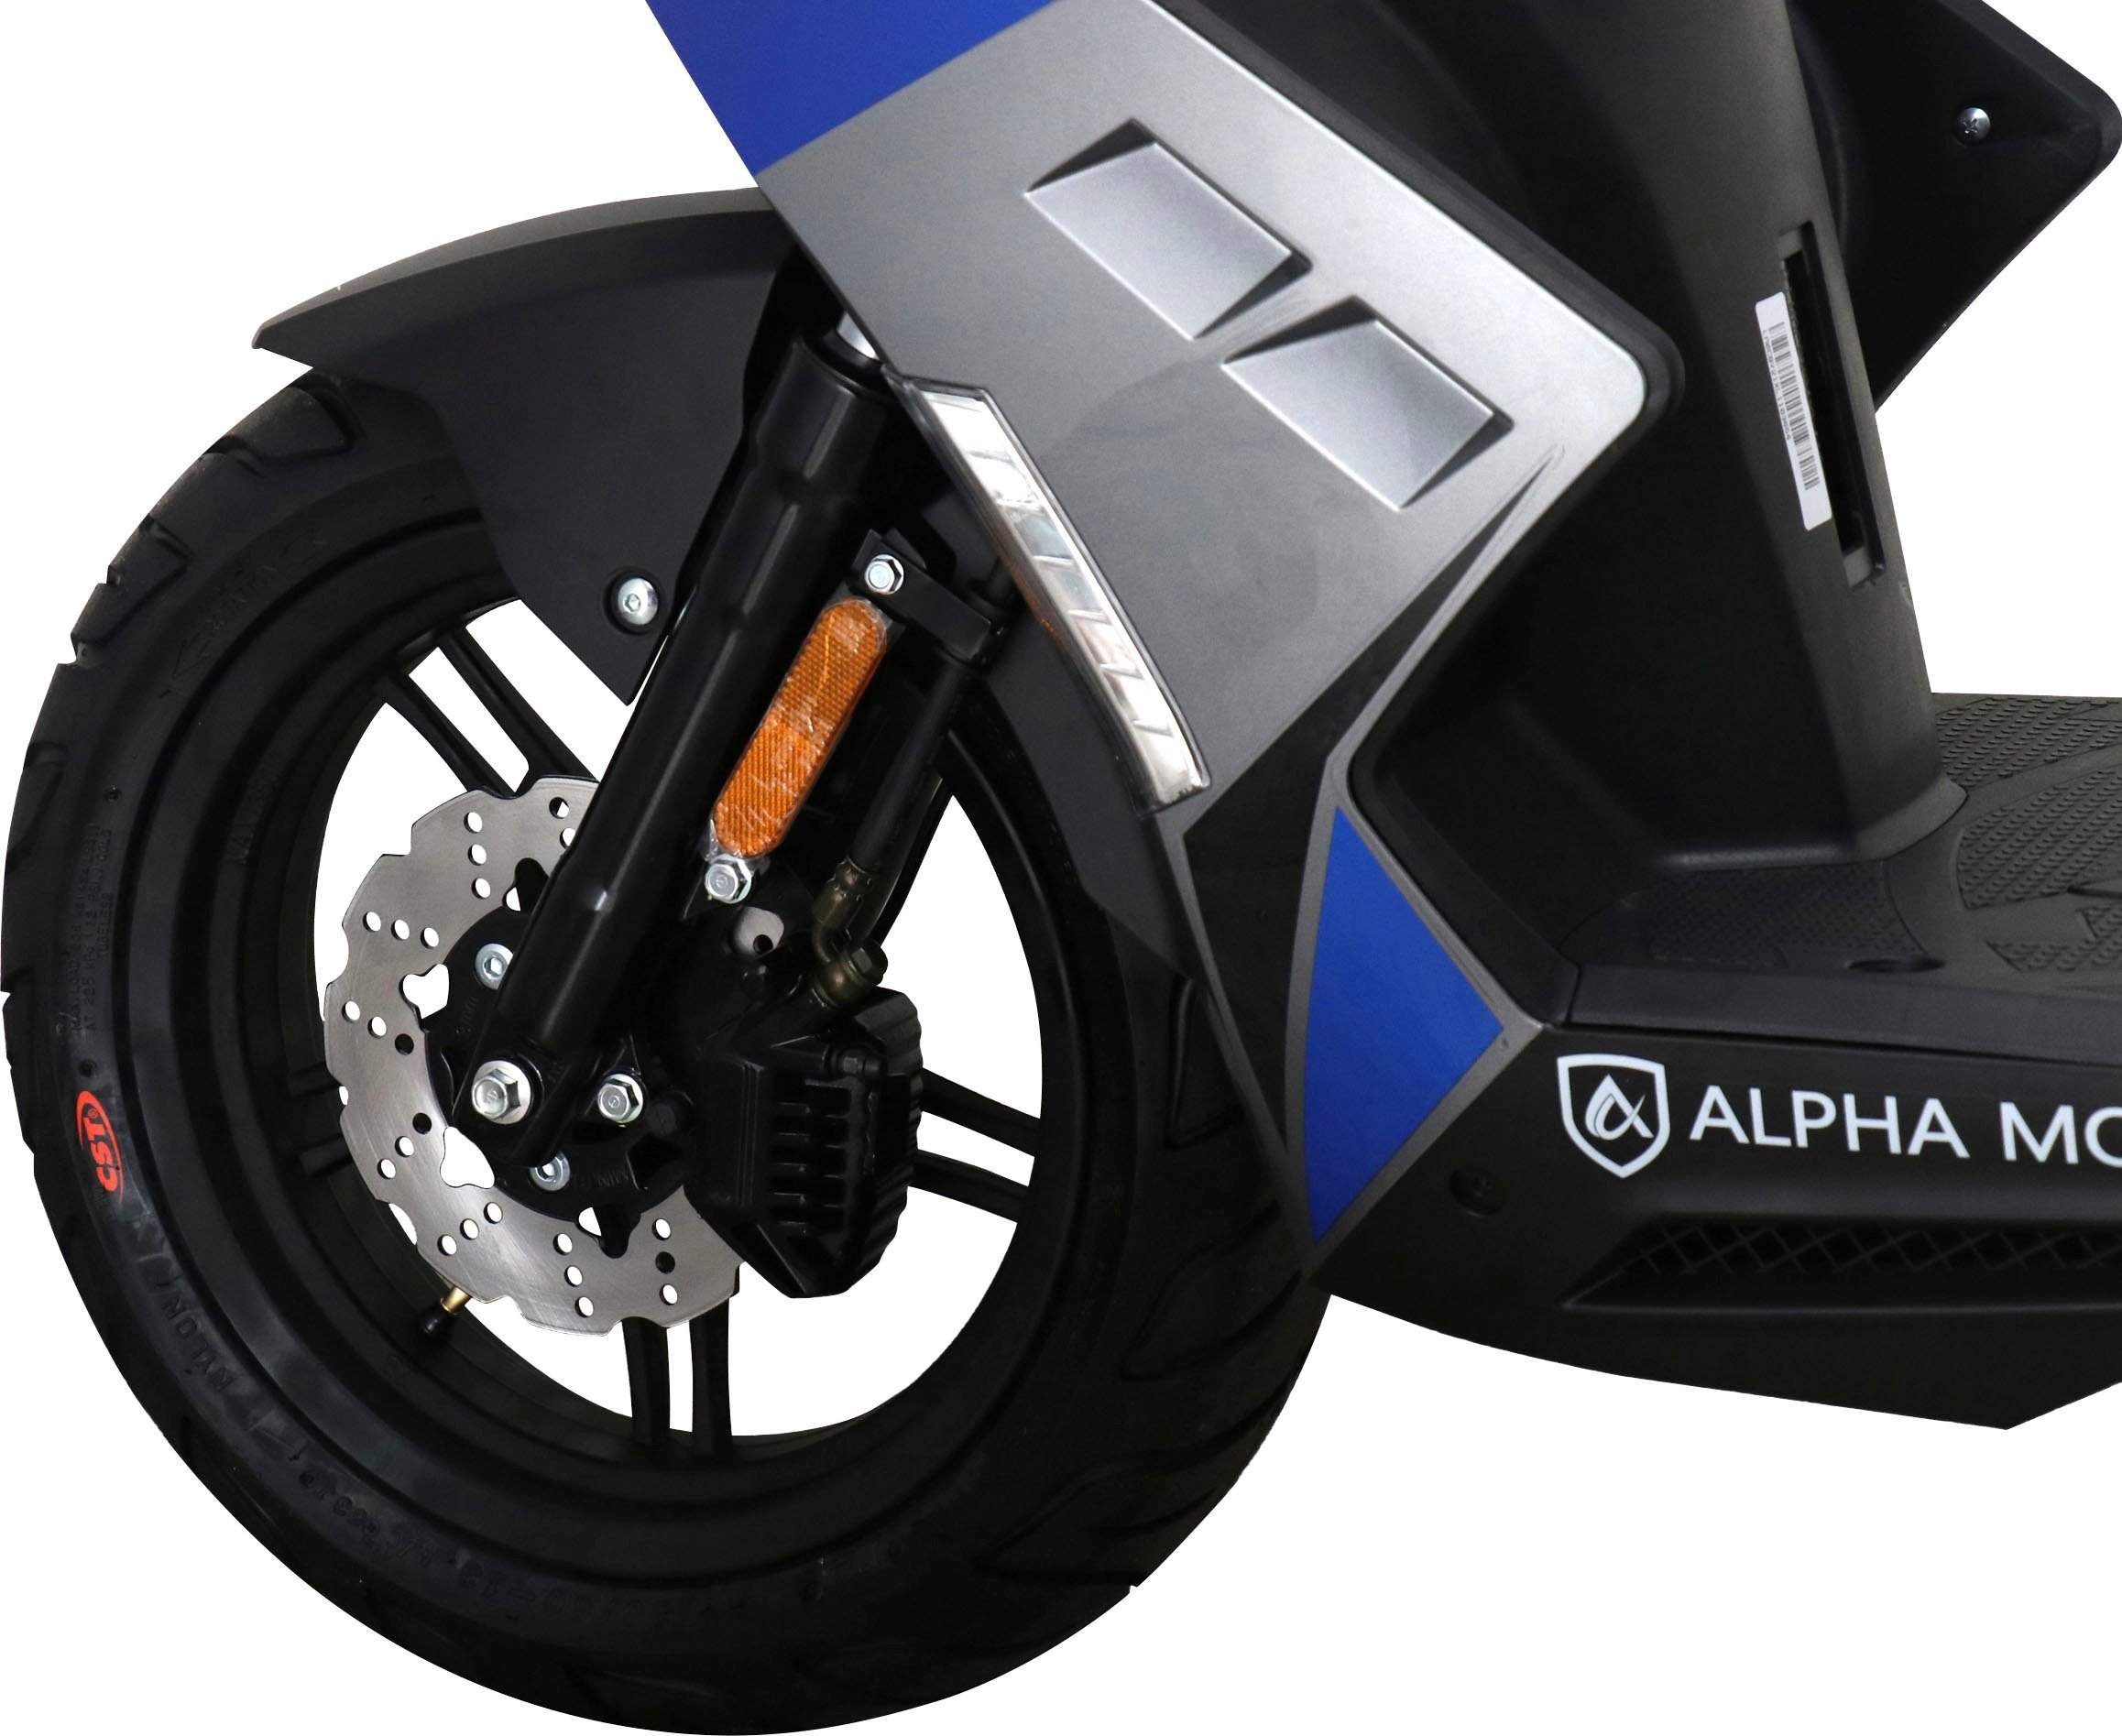 Alpha Motors Mofaroller Euro 25 km/h, Mustang blau-grau ccm, 50 5 FI